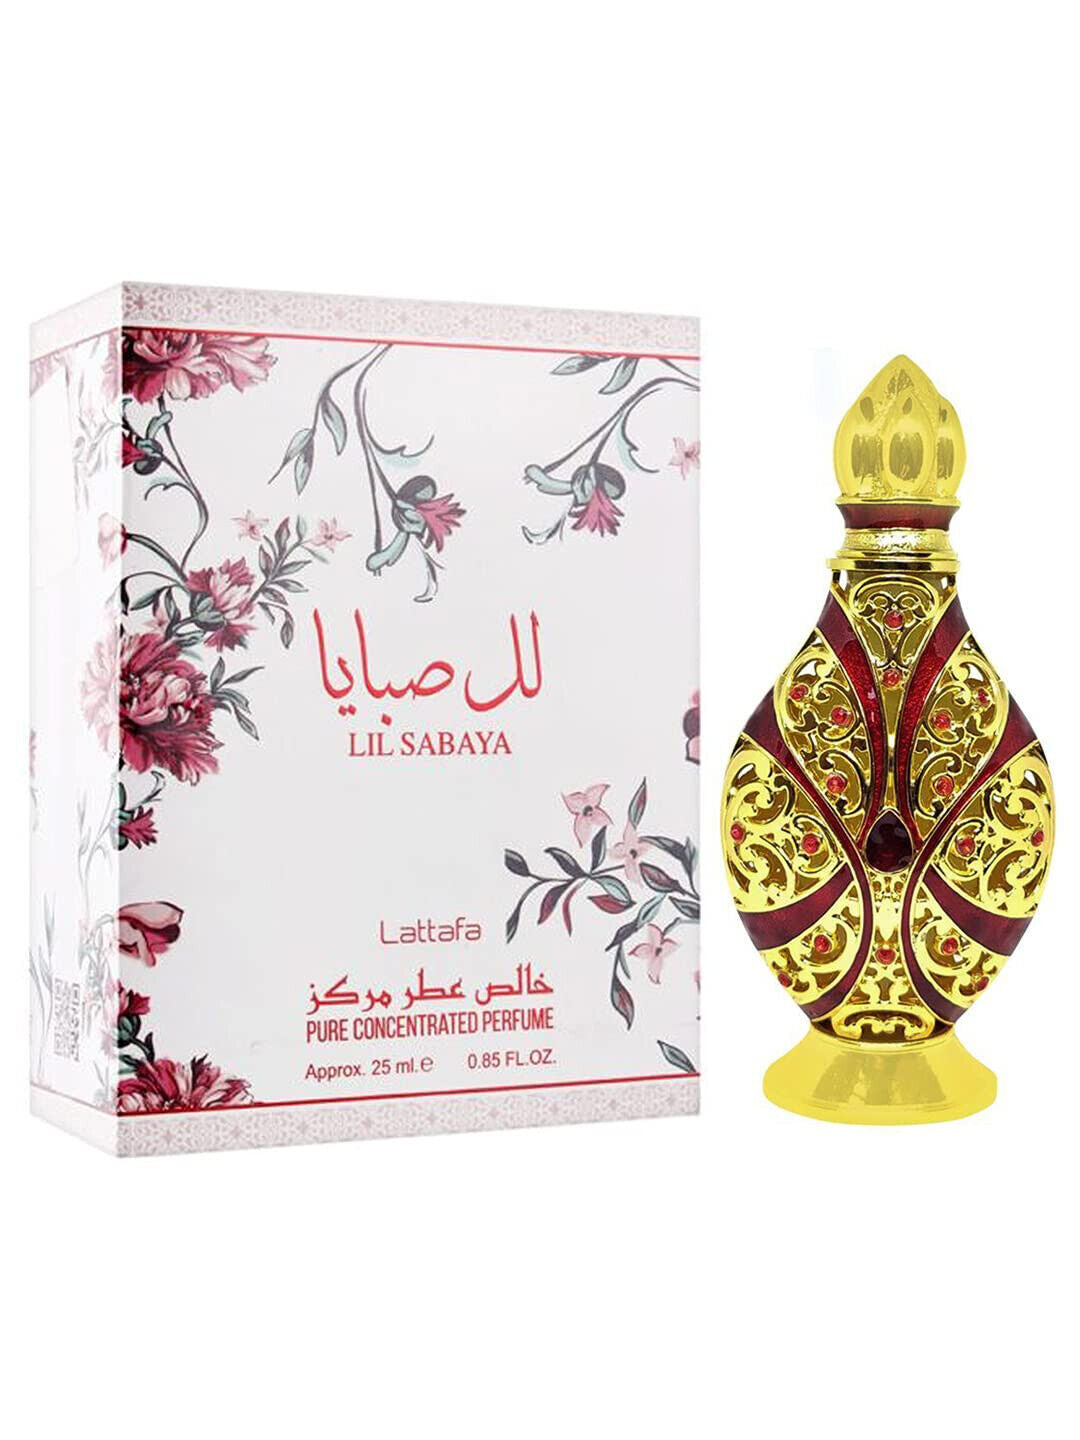 Lil Sabaya Attar CPO (25ml) perfume oil by Lattafa